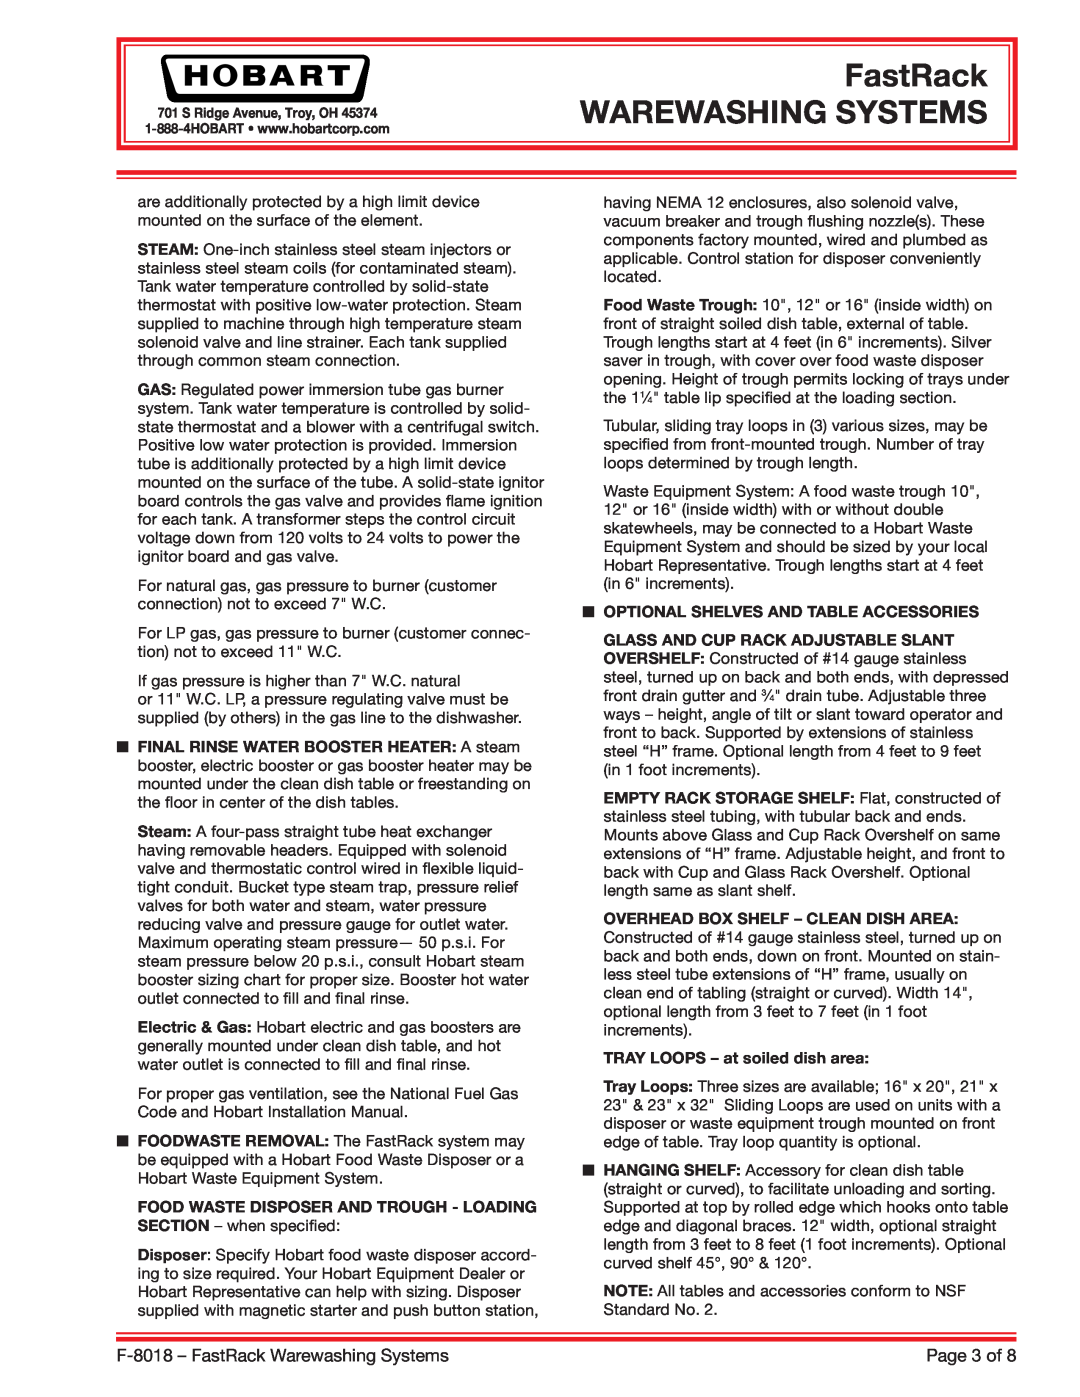 Hobart specifications FastRack WAREWASHING SYSTEMS, F-8018- FastRack Warewashing Systems, Page 3 of 